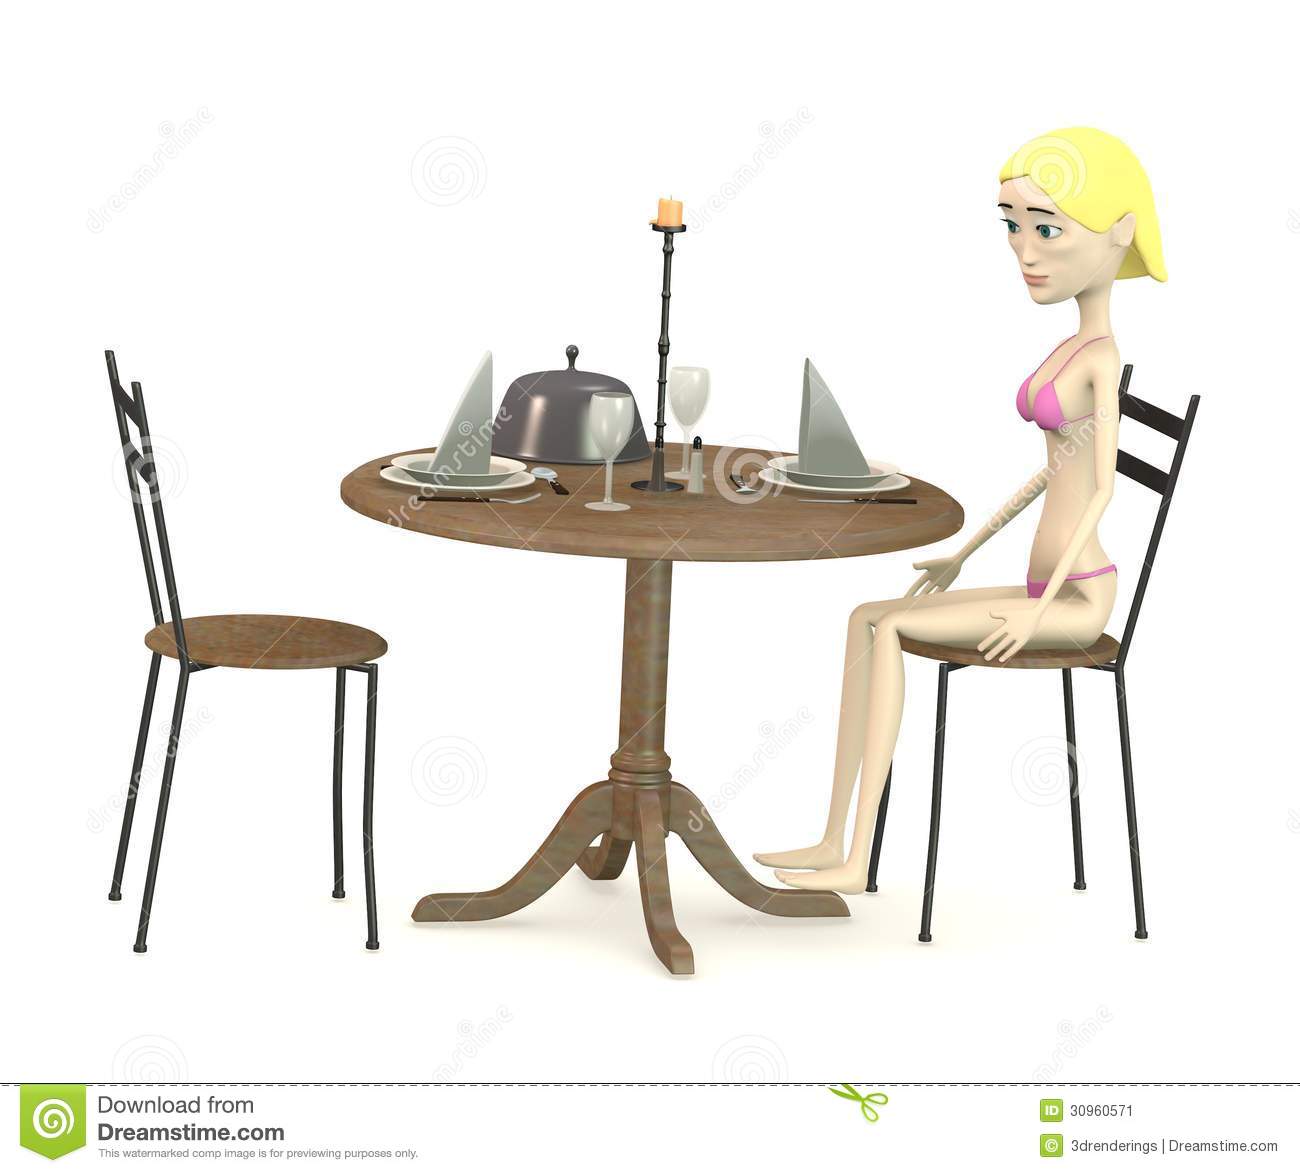 Cartoon Girl Sits On Restaurant Chair Stock Image   Image  30960571